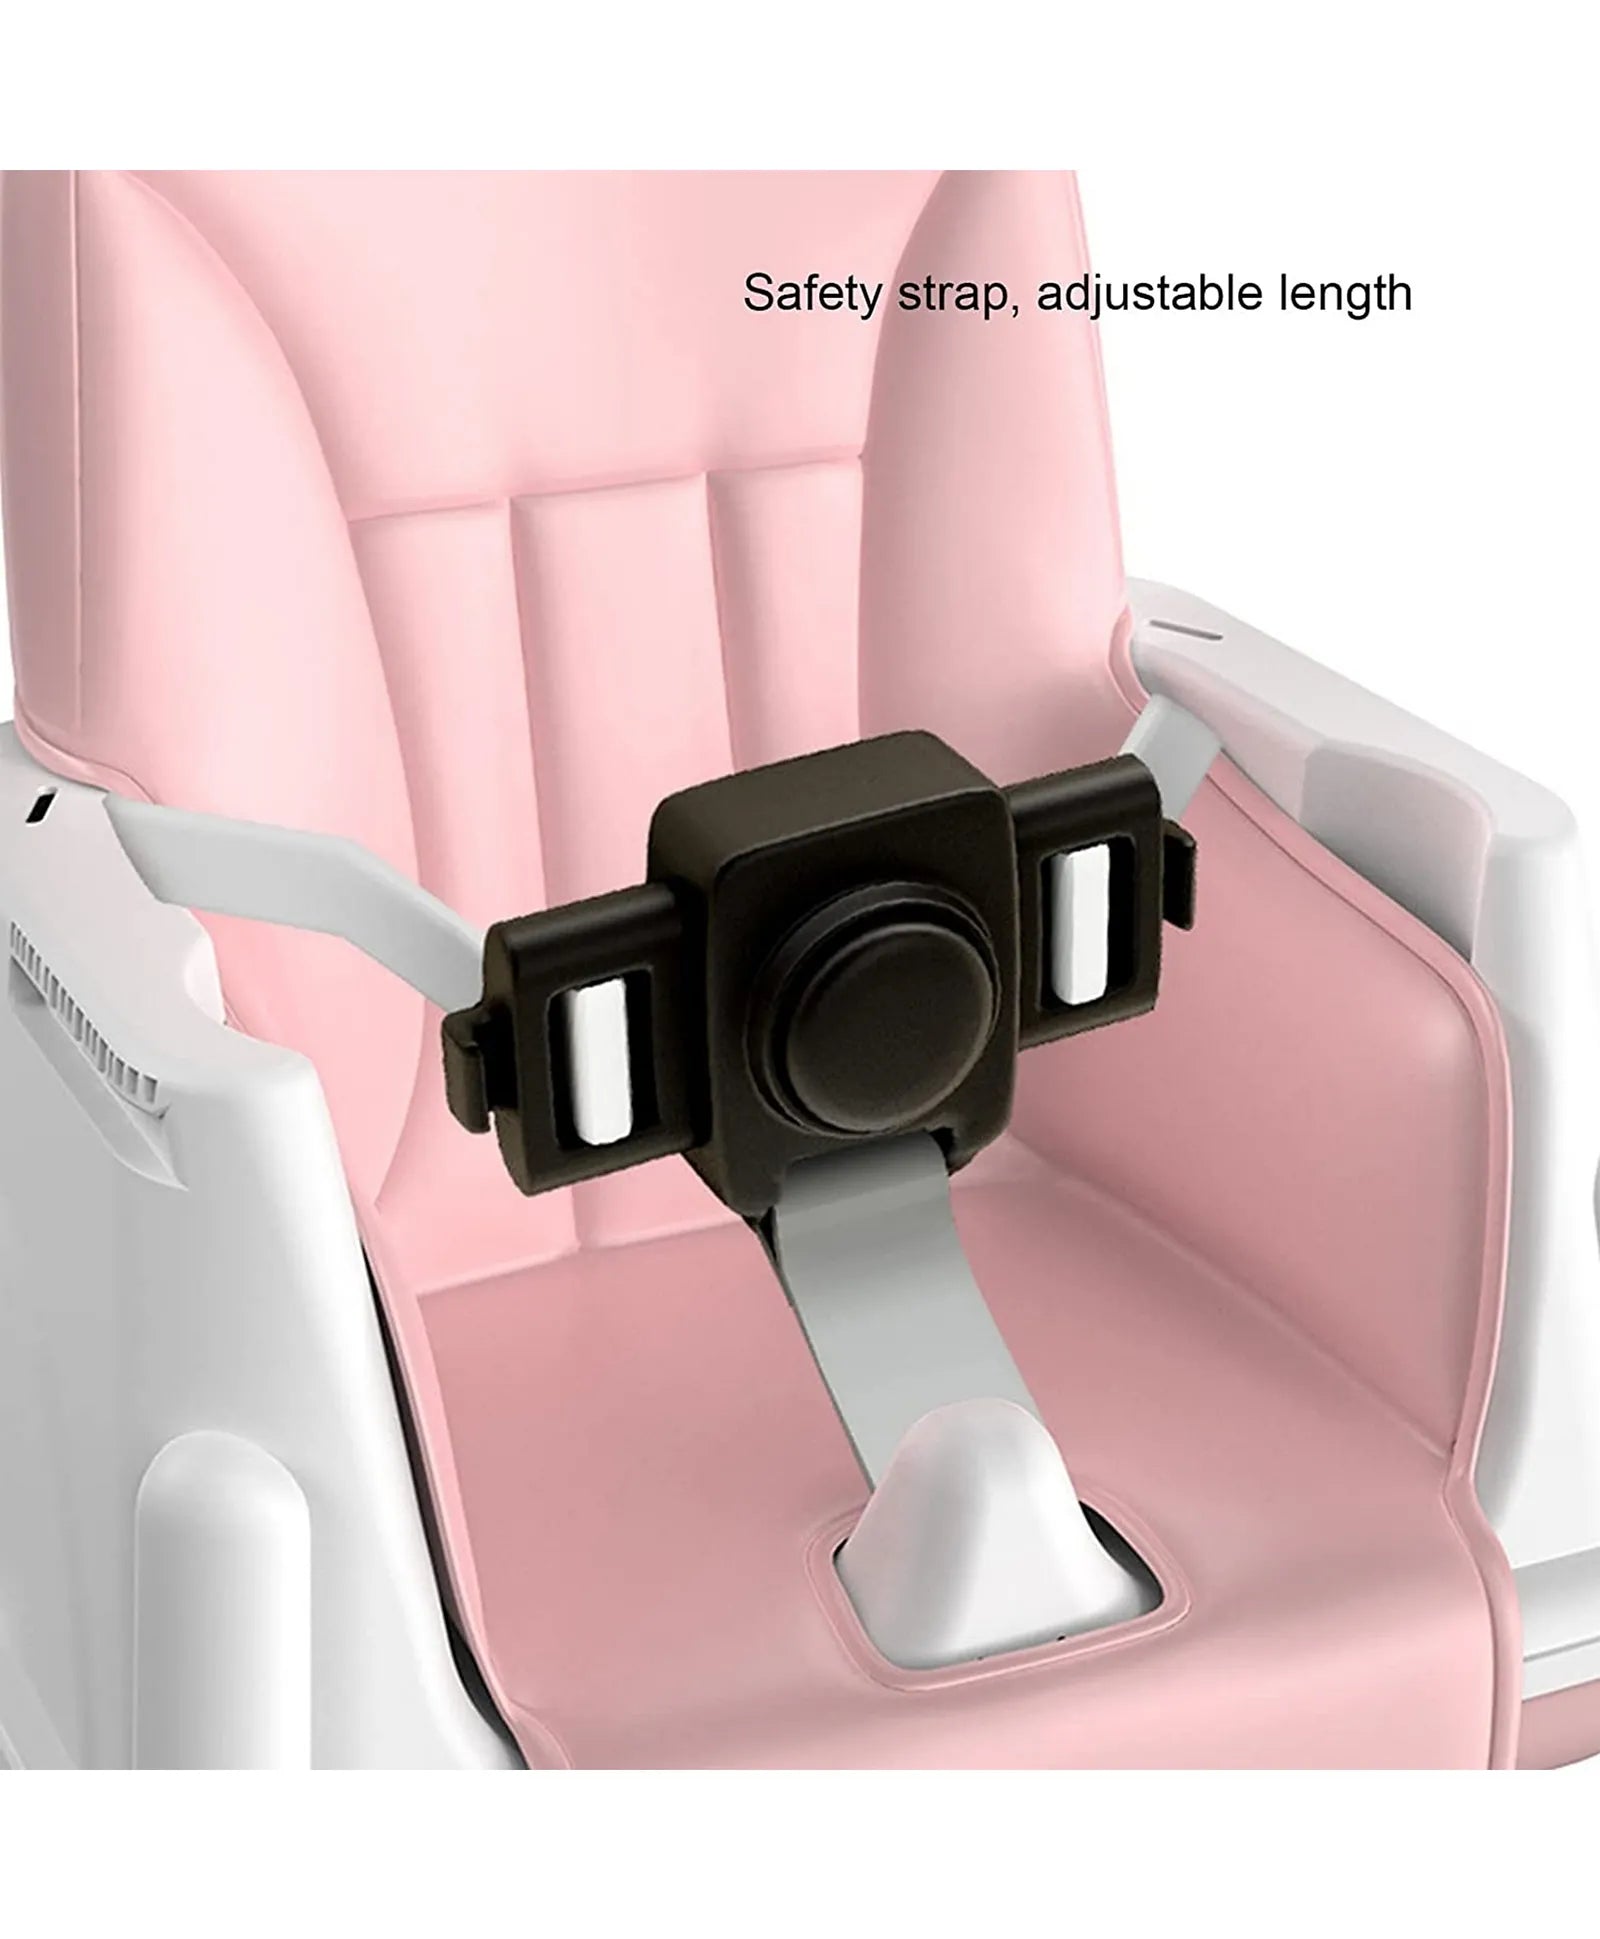 Pikkaboo European Standard All-in-One High Chair for Babies - Pink - Laadlee